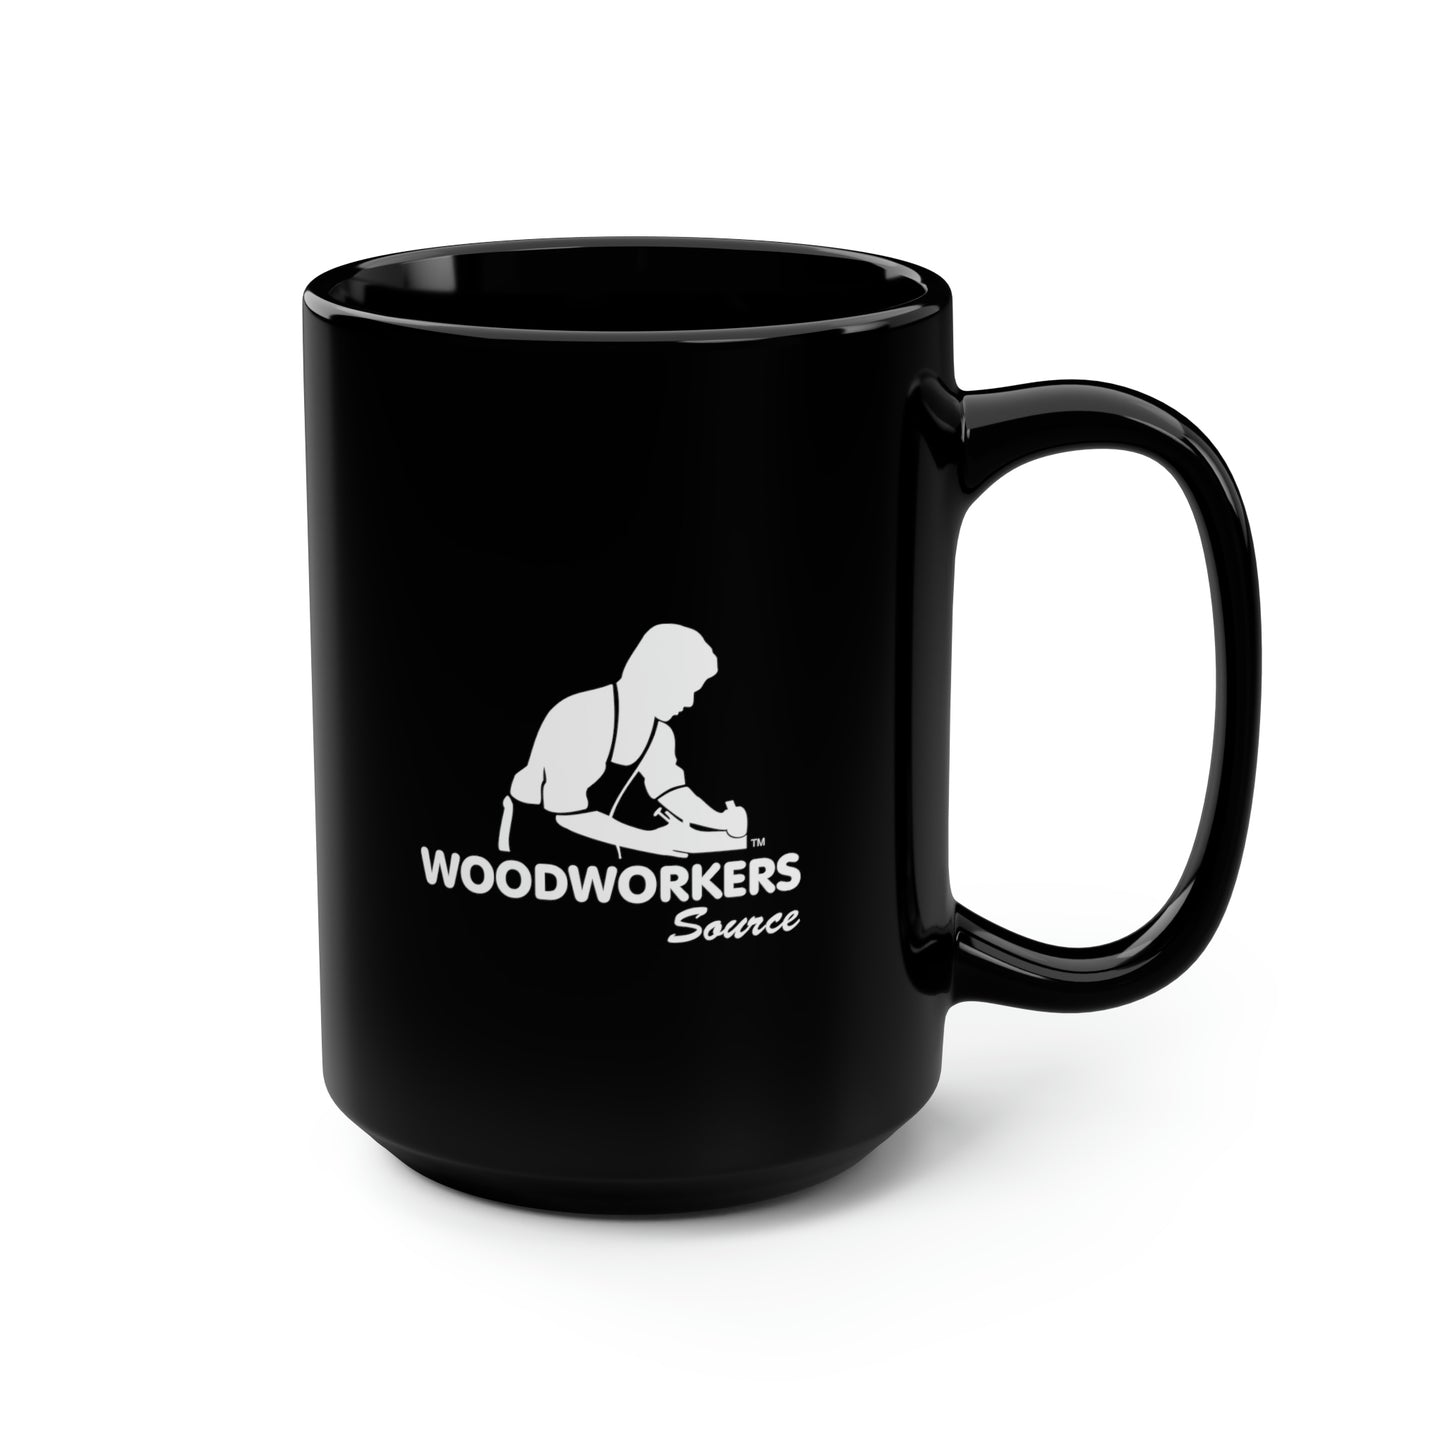 Woodworkers Source Black Coffee Mug, 15oz